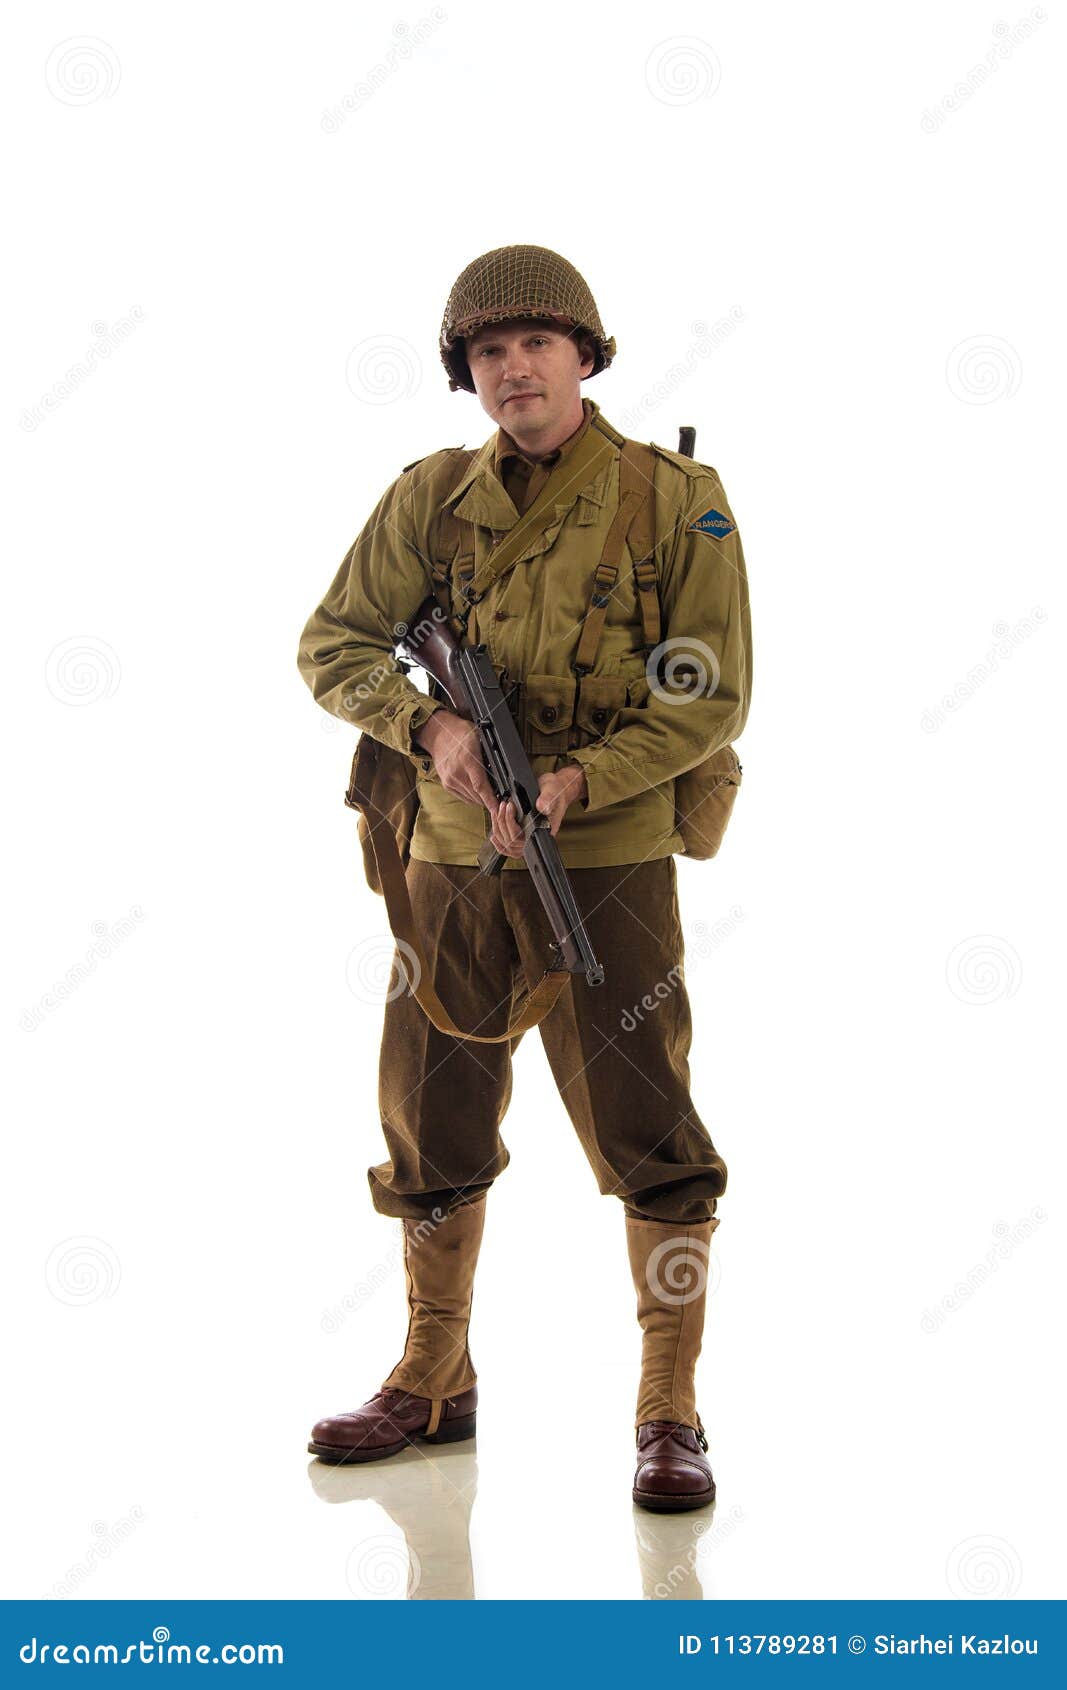 Man Actor in Military Uniform of American Ranger of War II Period Stock Image - of leadership, battalion: